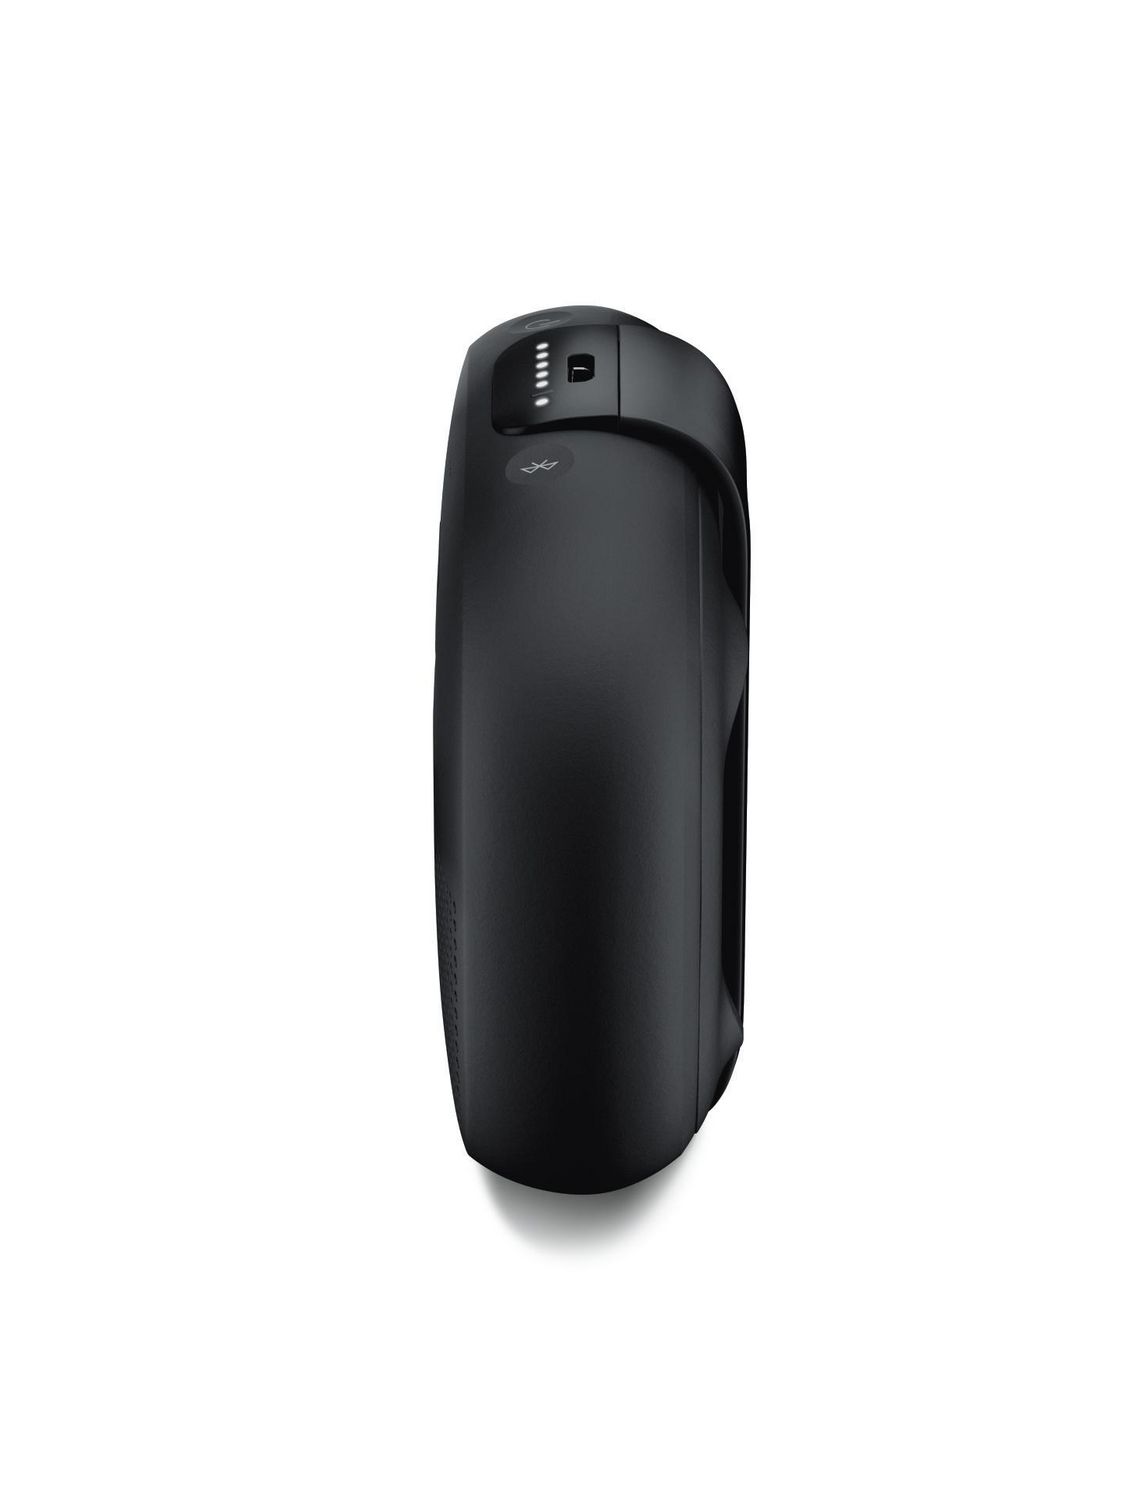 Bose SoundLink Micro Bluetooth Speaker - Walmart.ca